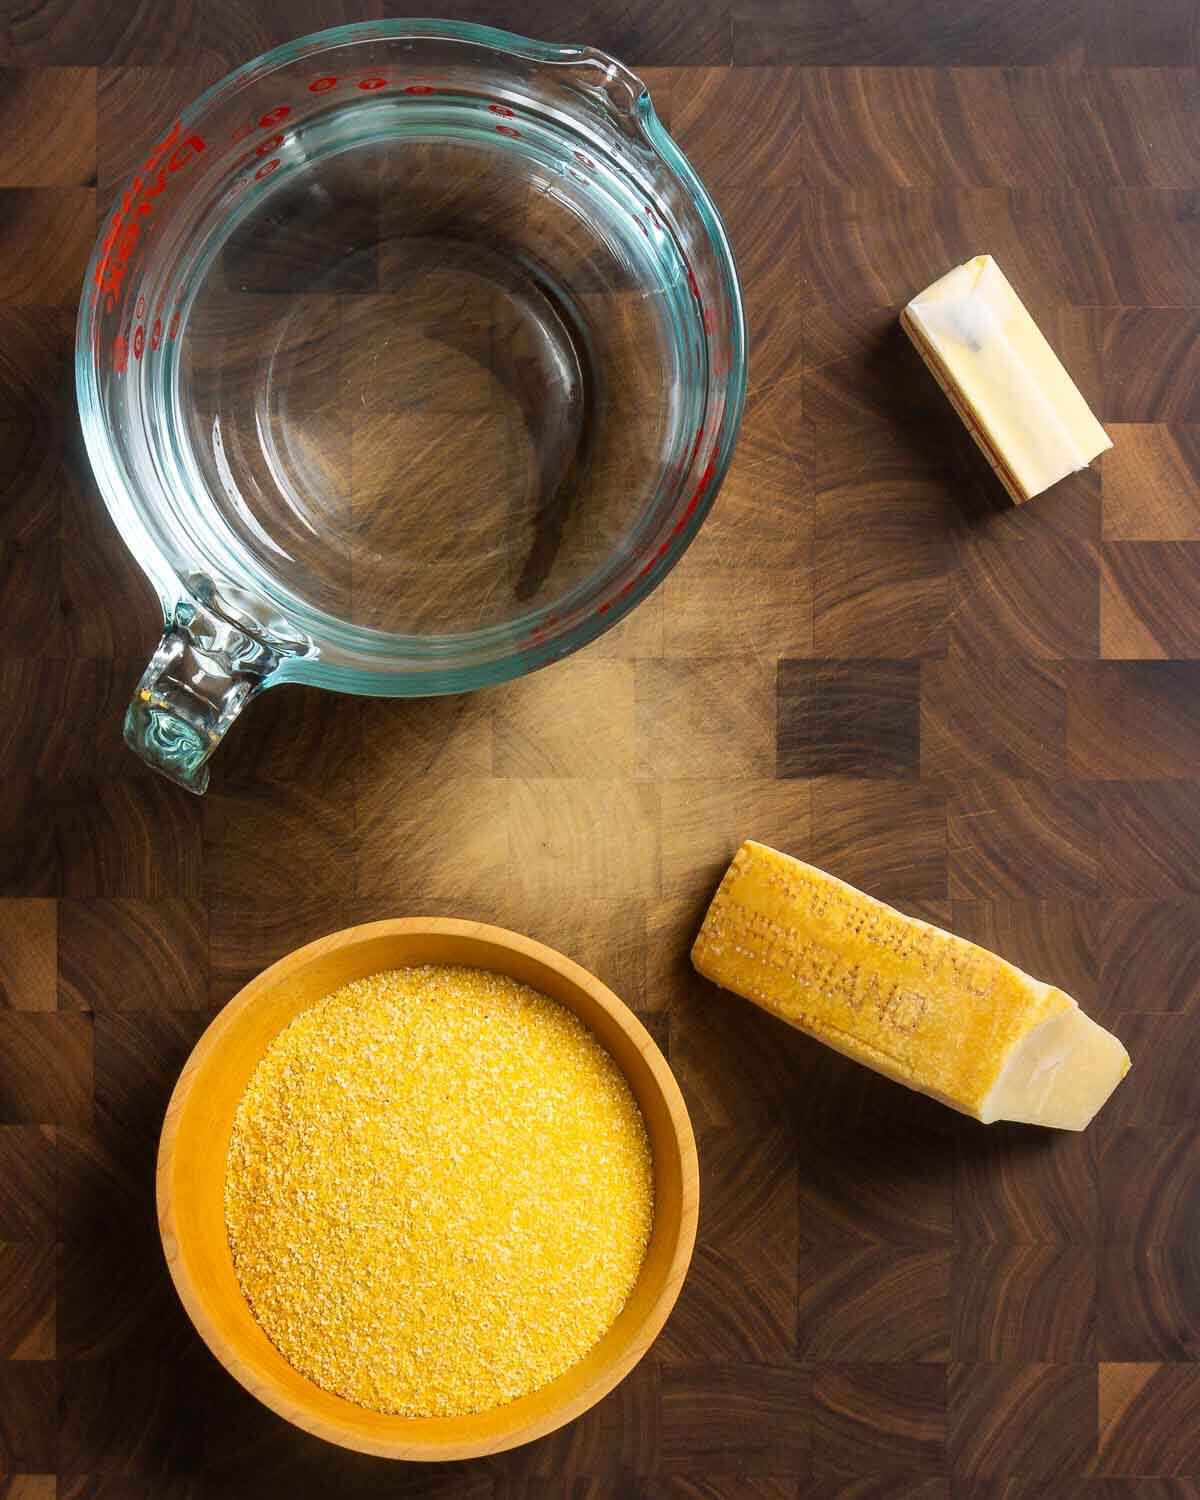 Ingredients shown: water, butter, Parmigiano Reggiano, and polenta.